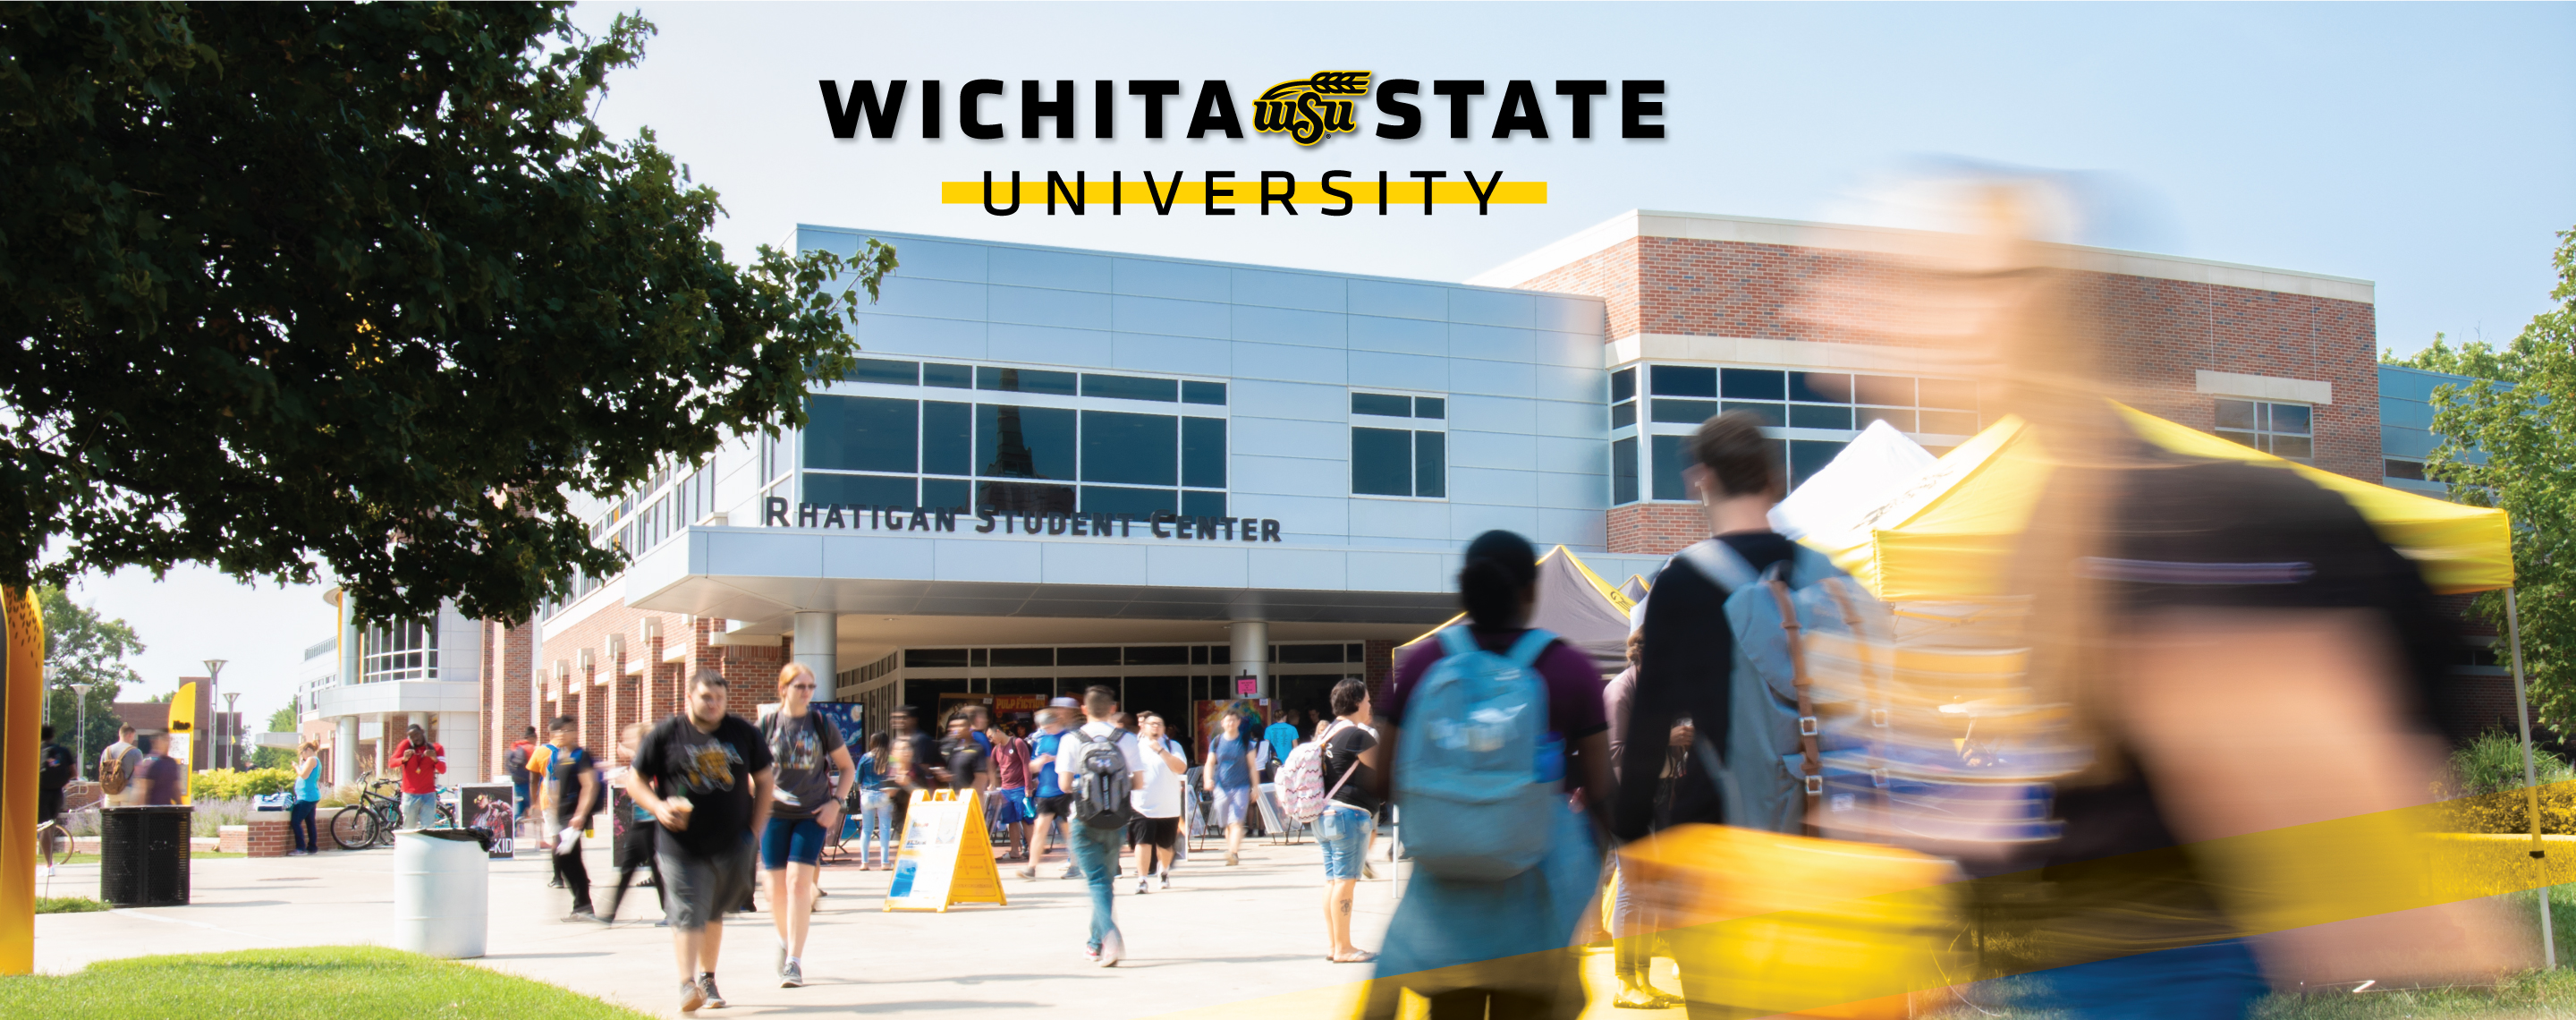 Wichita State University Sporting Events